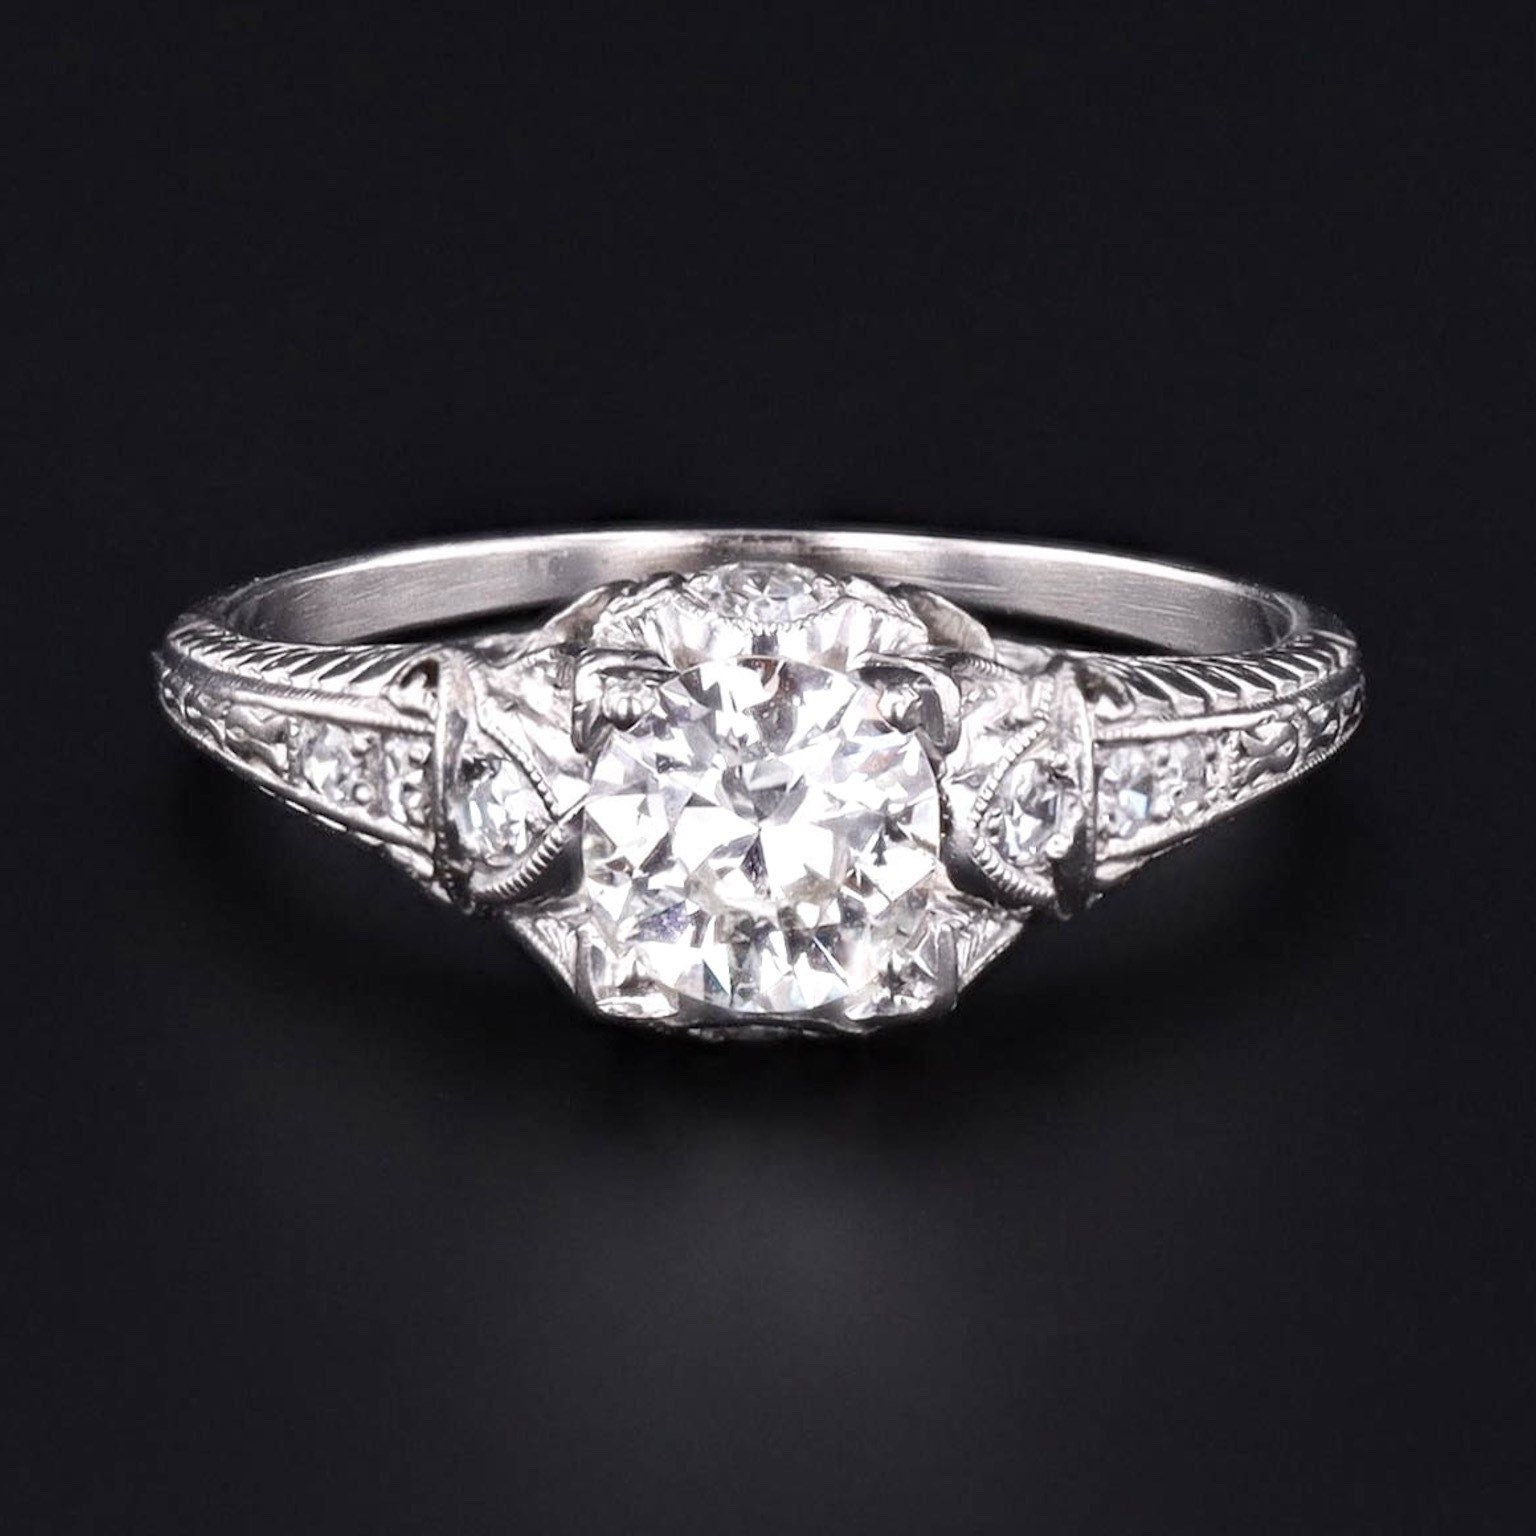 Antique Diamond Ring | Edwardian Diamond Ring 